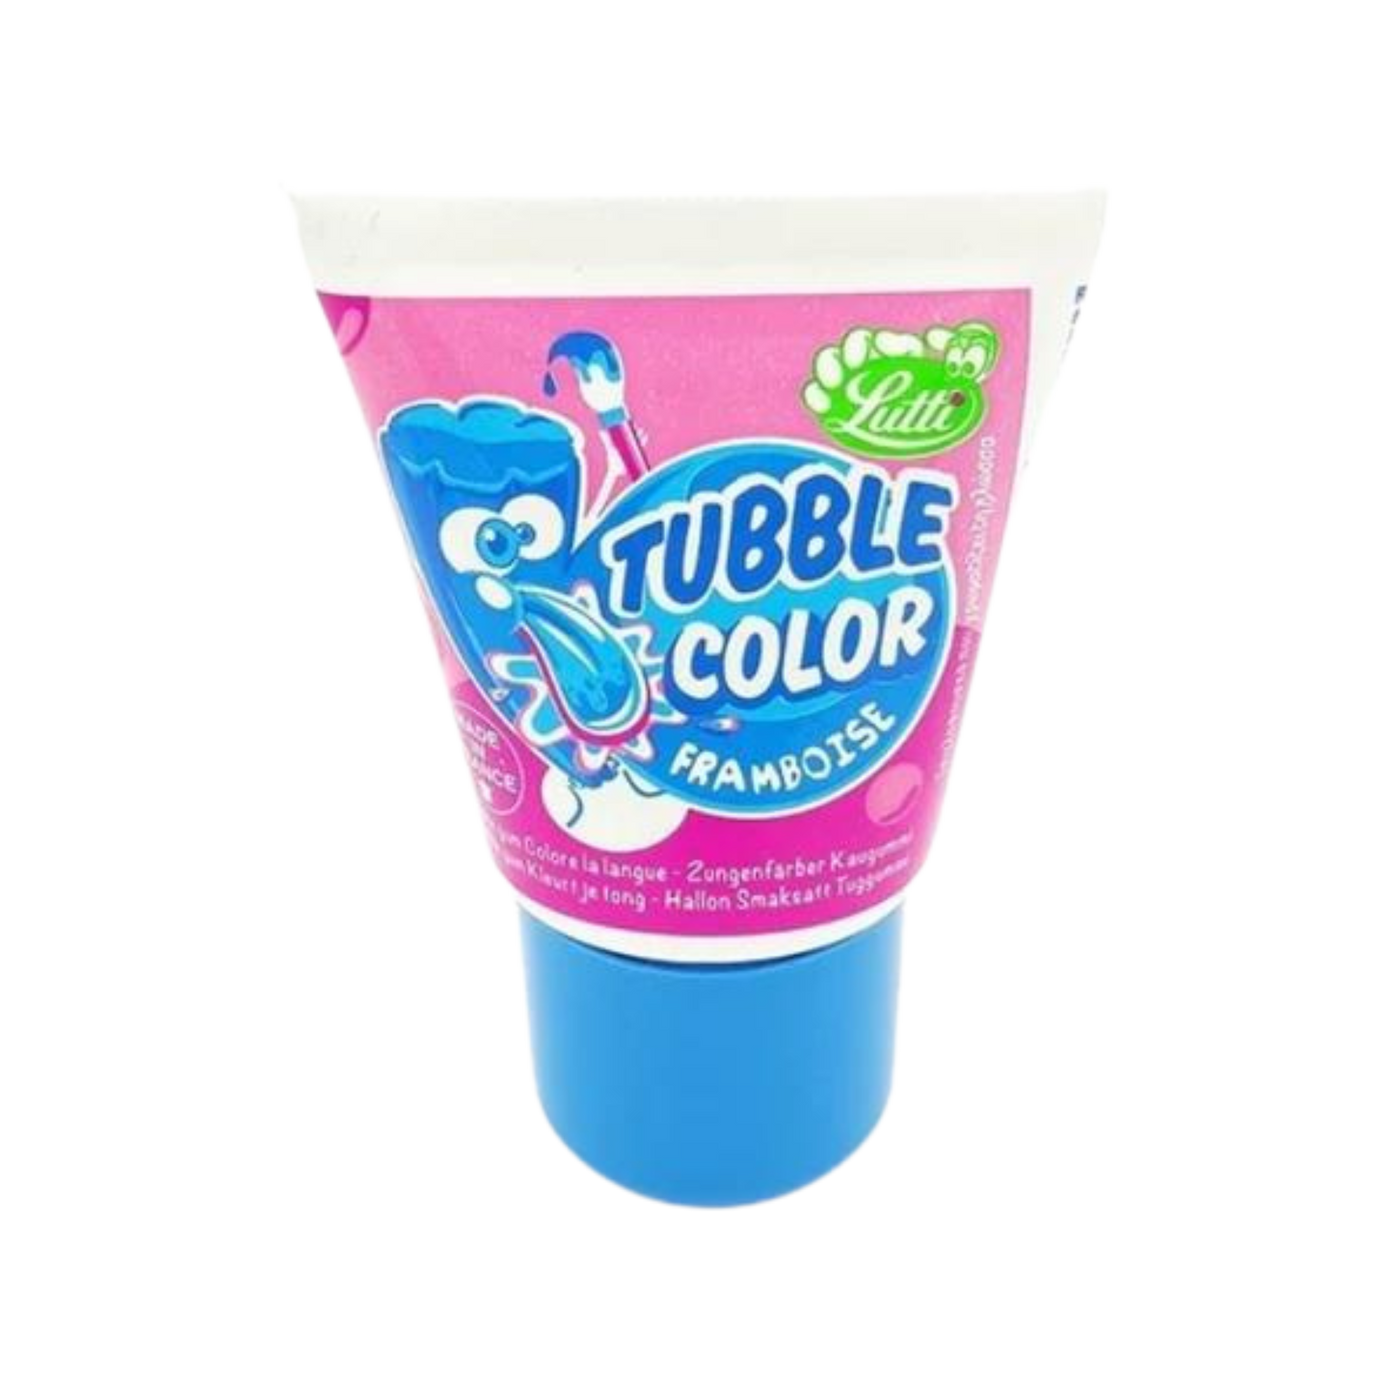 Tubble Gum - United Kingdom